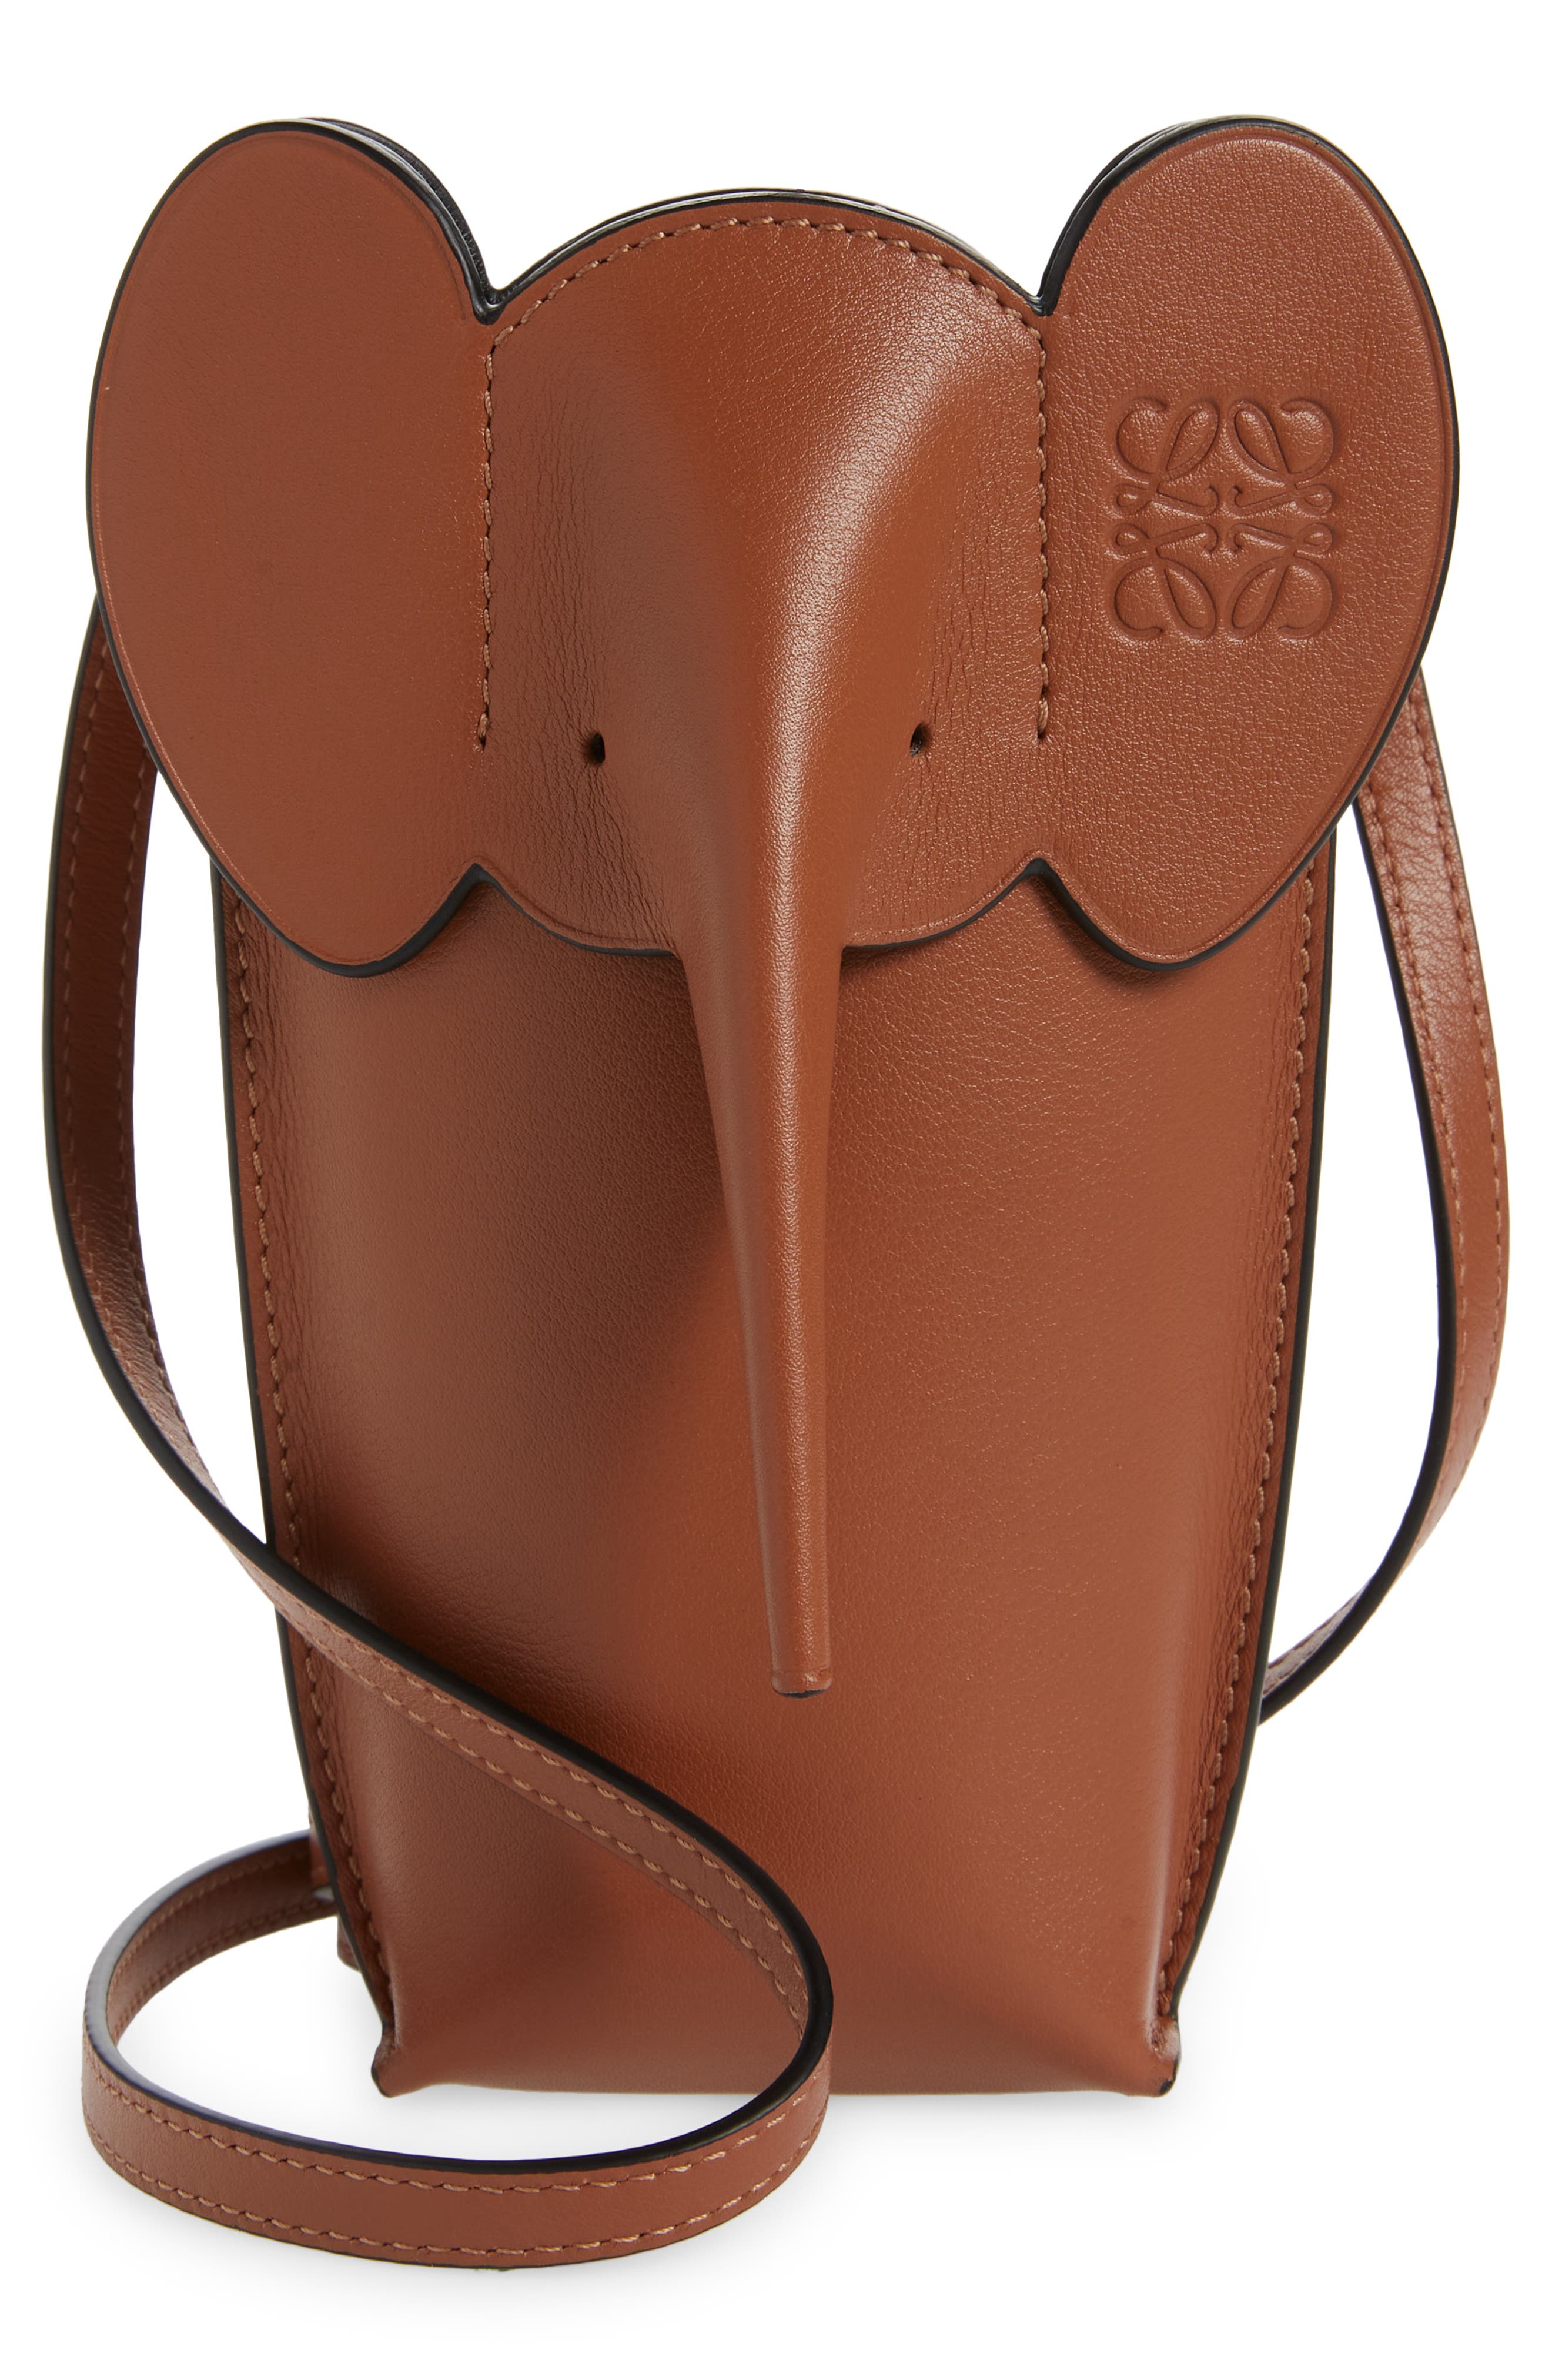 Loewe Elephant Pocket Leather Crossbody Bag in Tan at Nordstrom